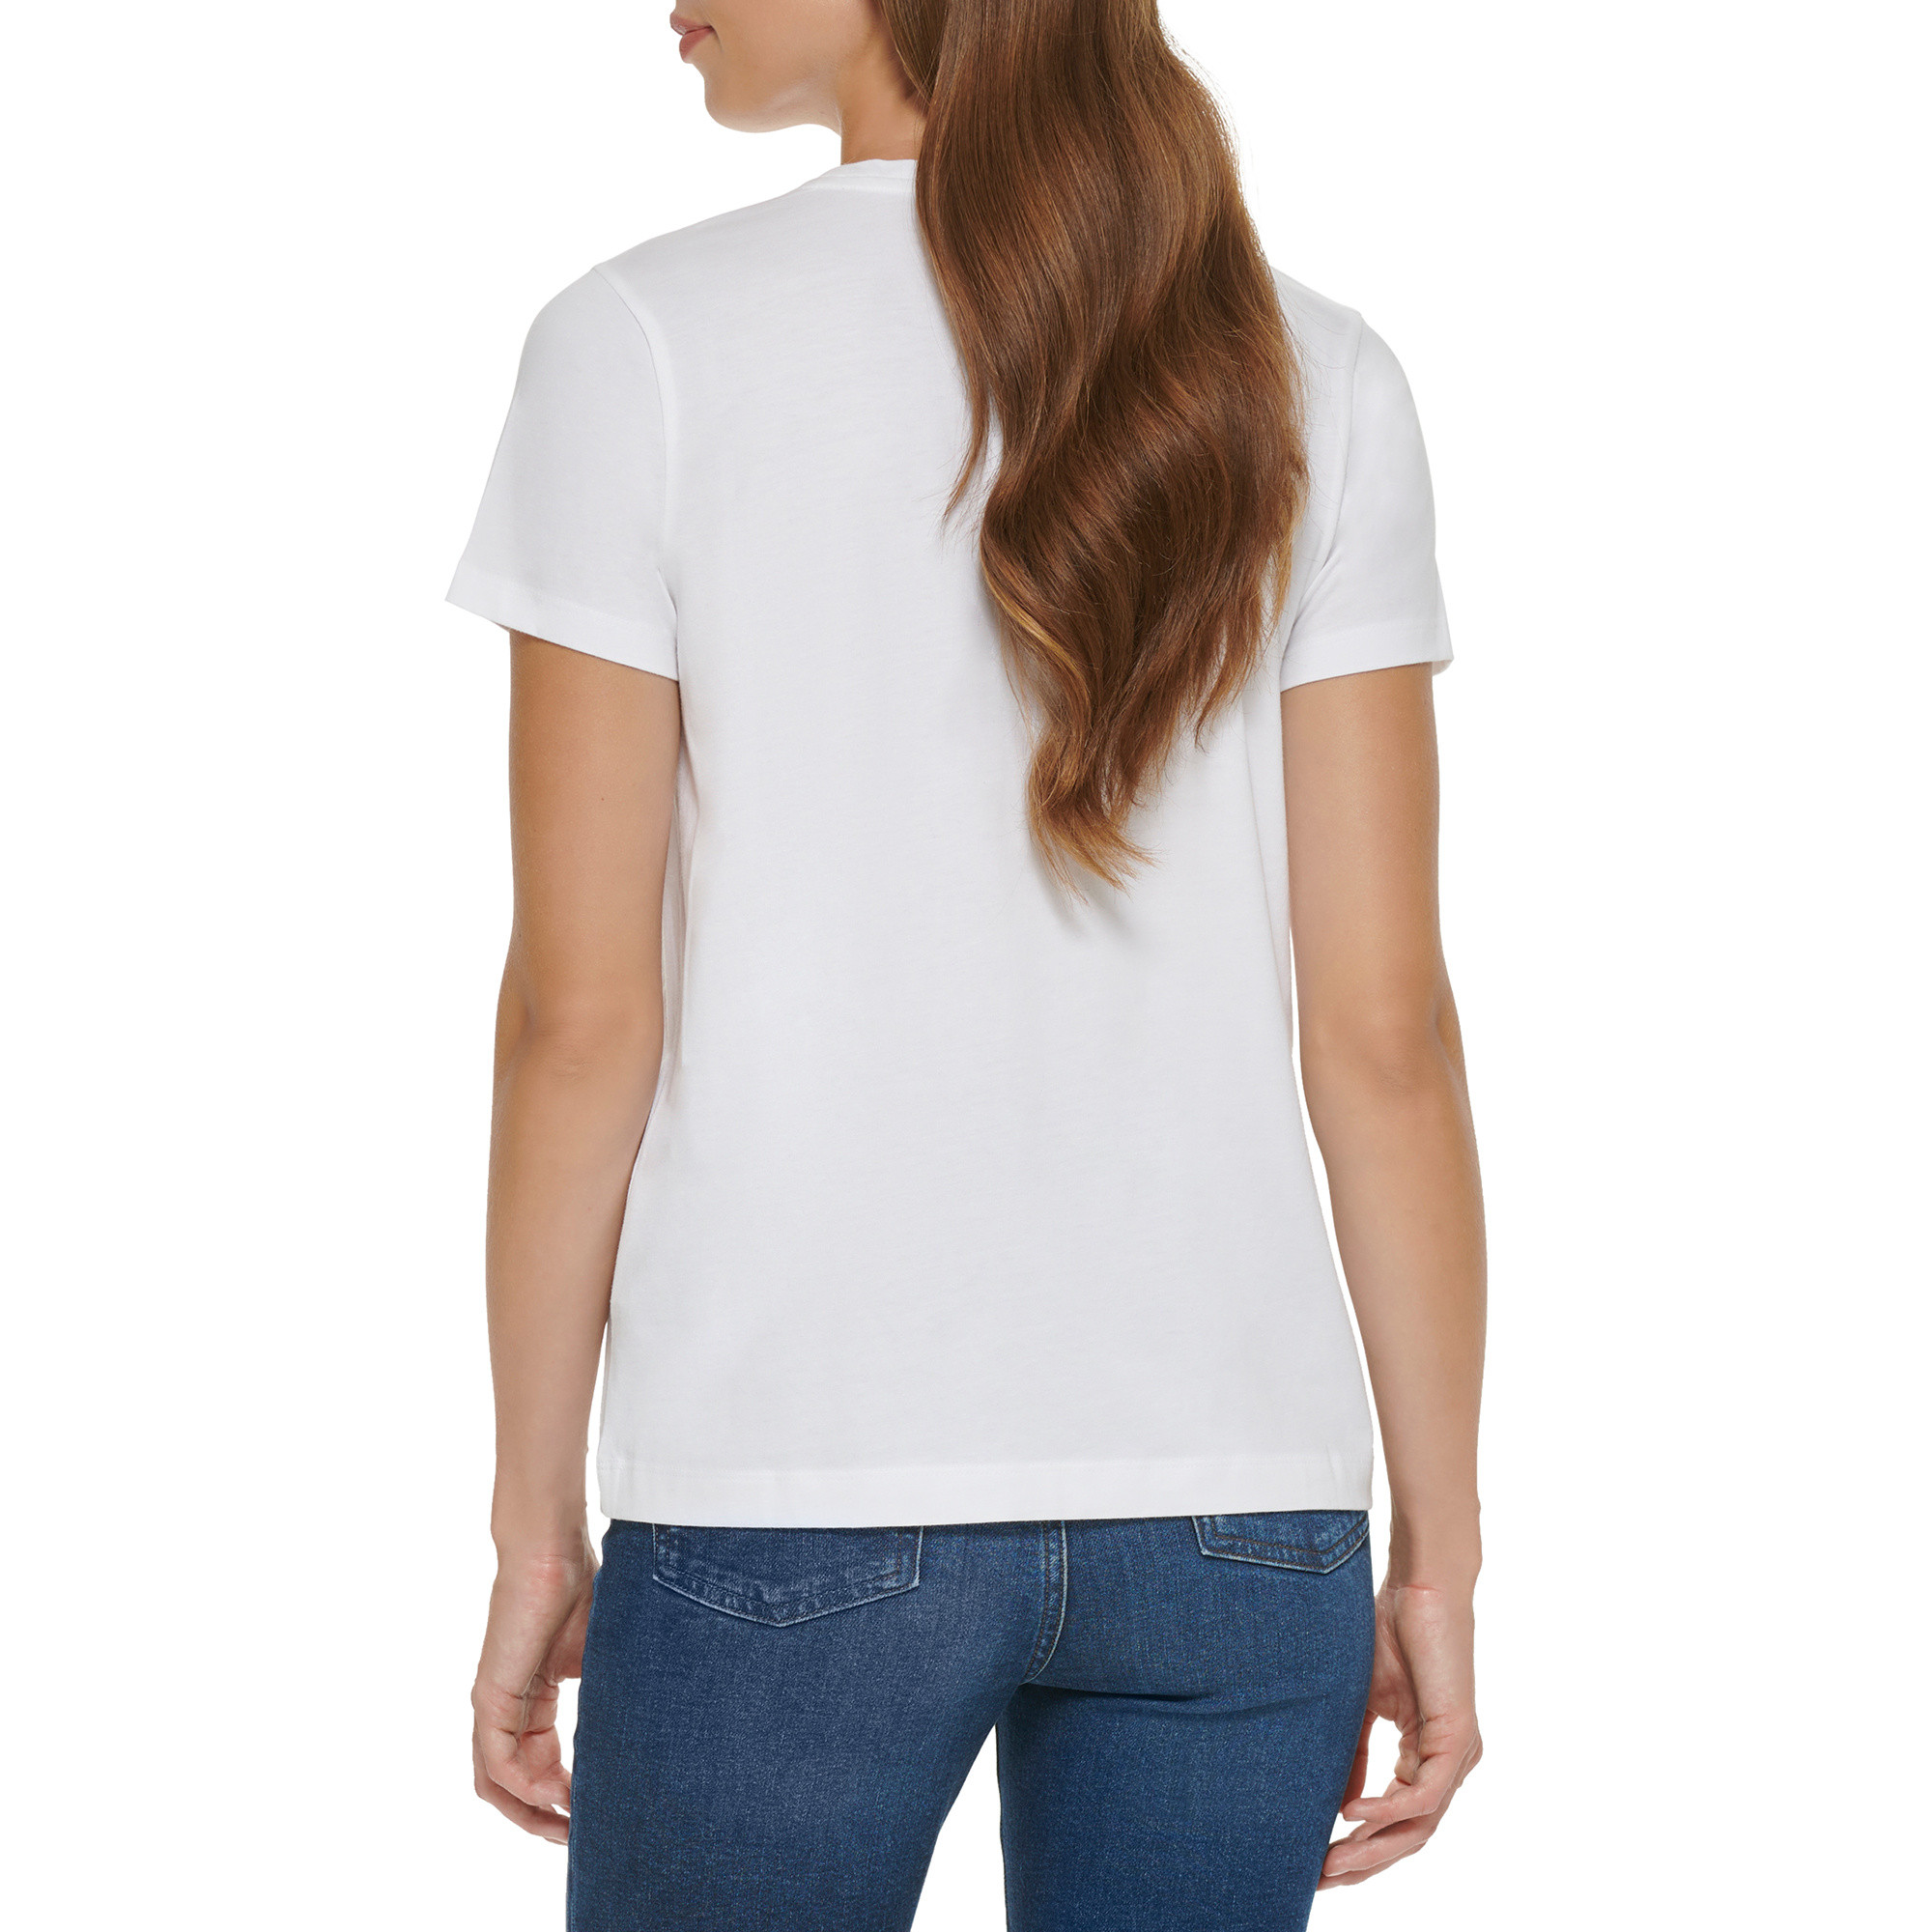 DKNY - T-shirt con logo, Bianco, large image number 5